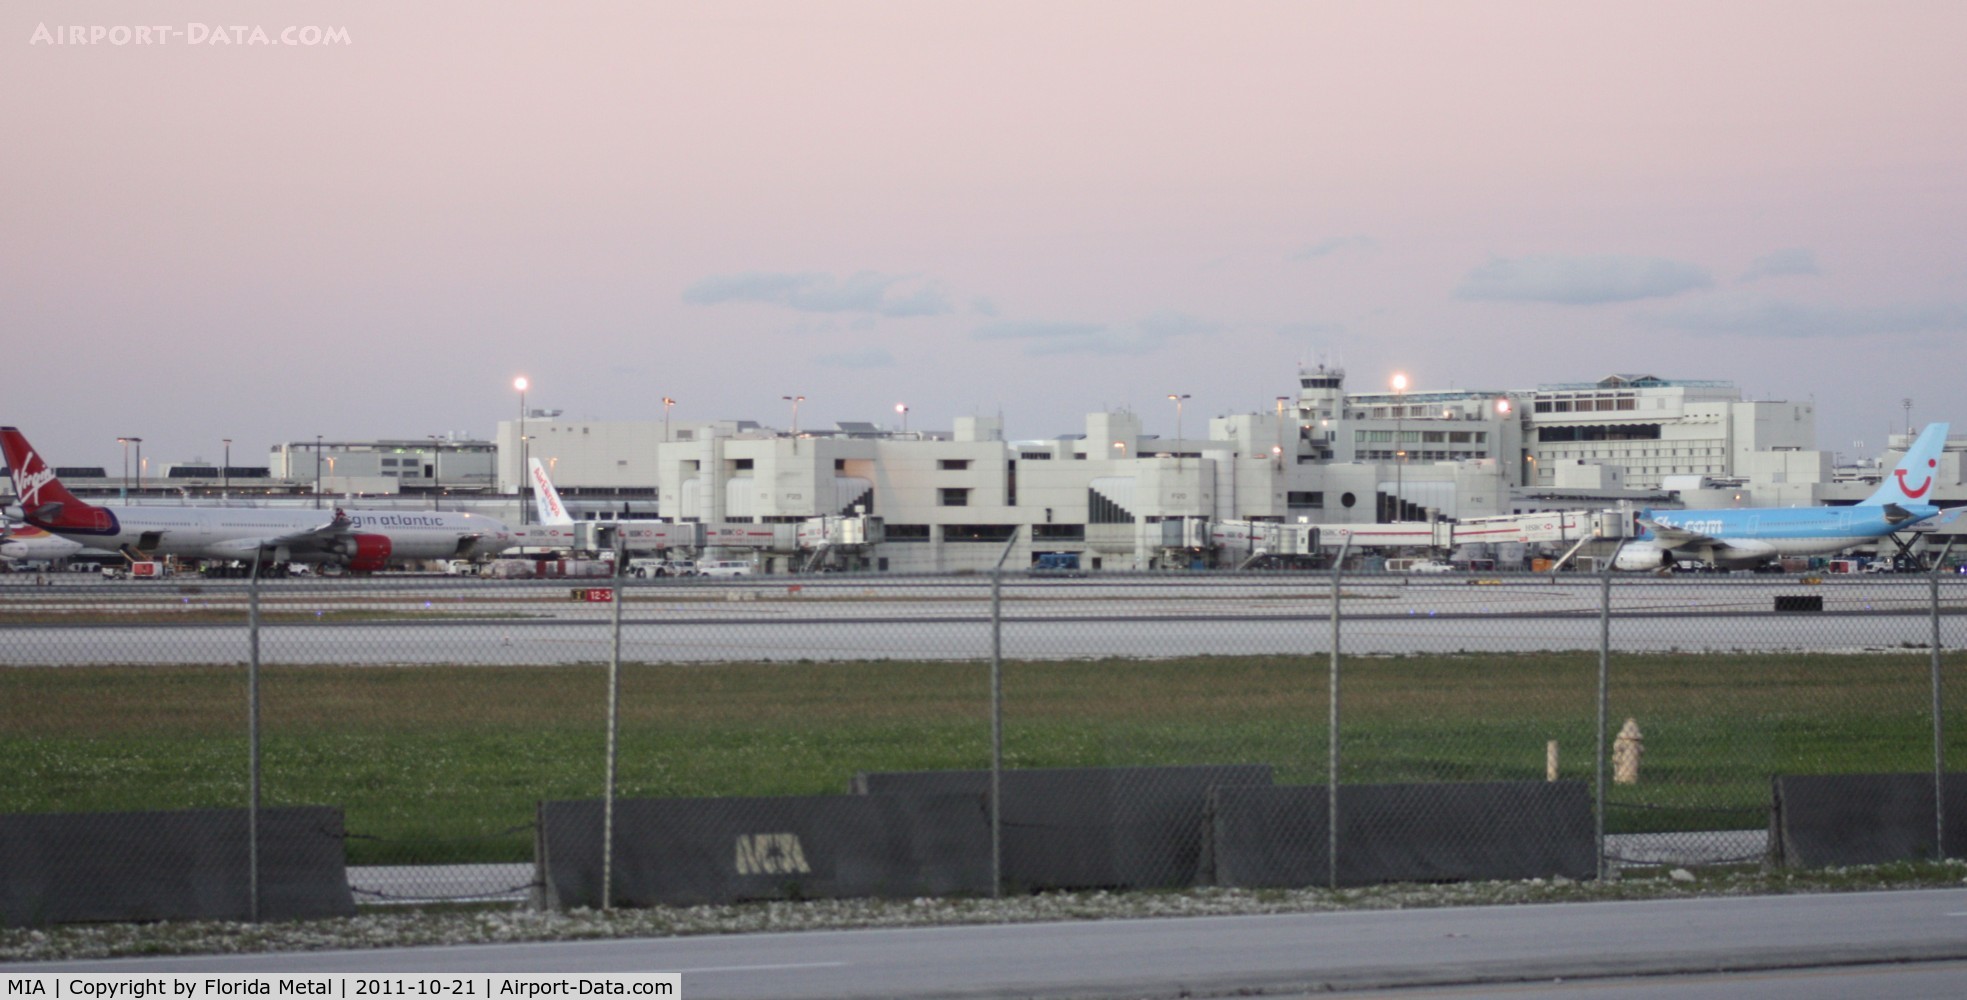 Miami International Airport (MIA) - The southside of the terminal at MIA